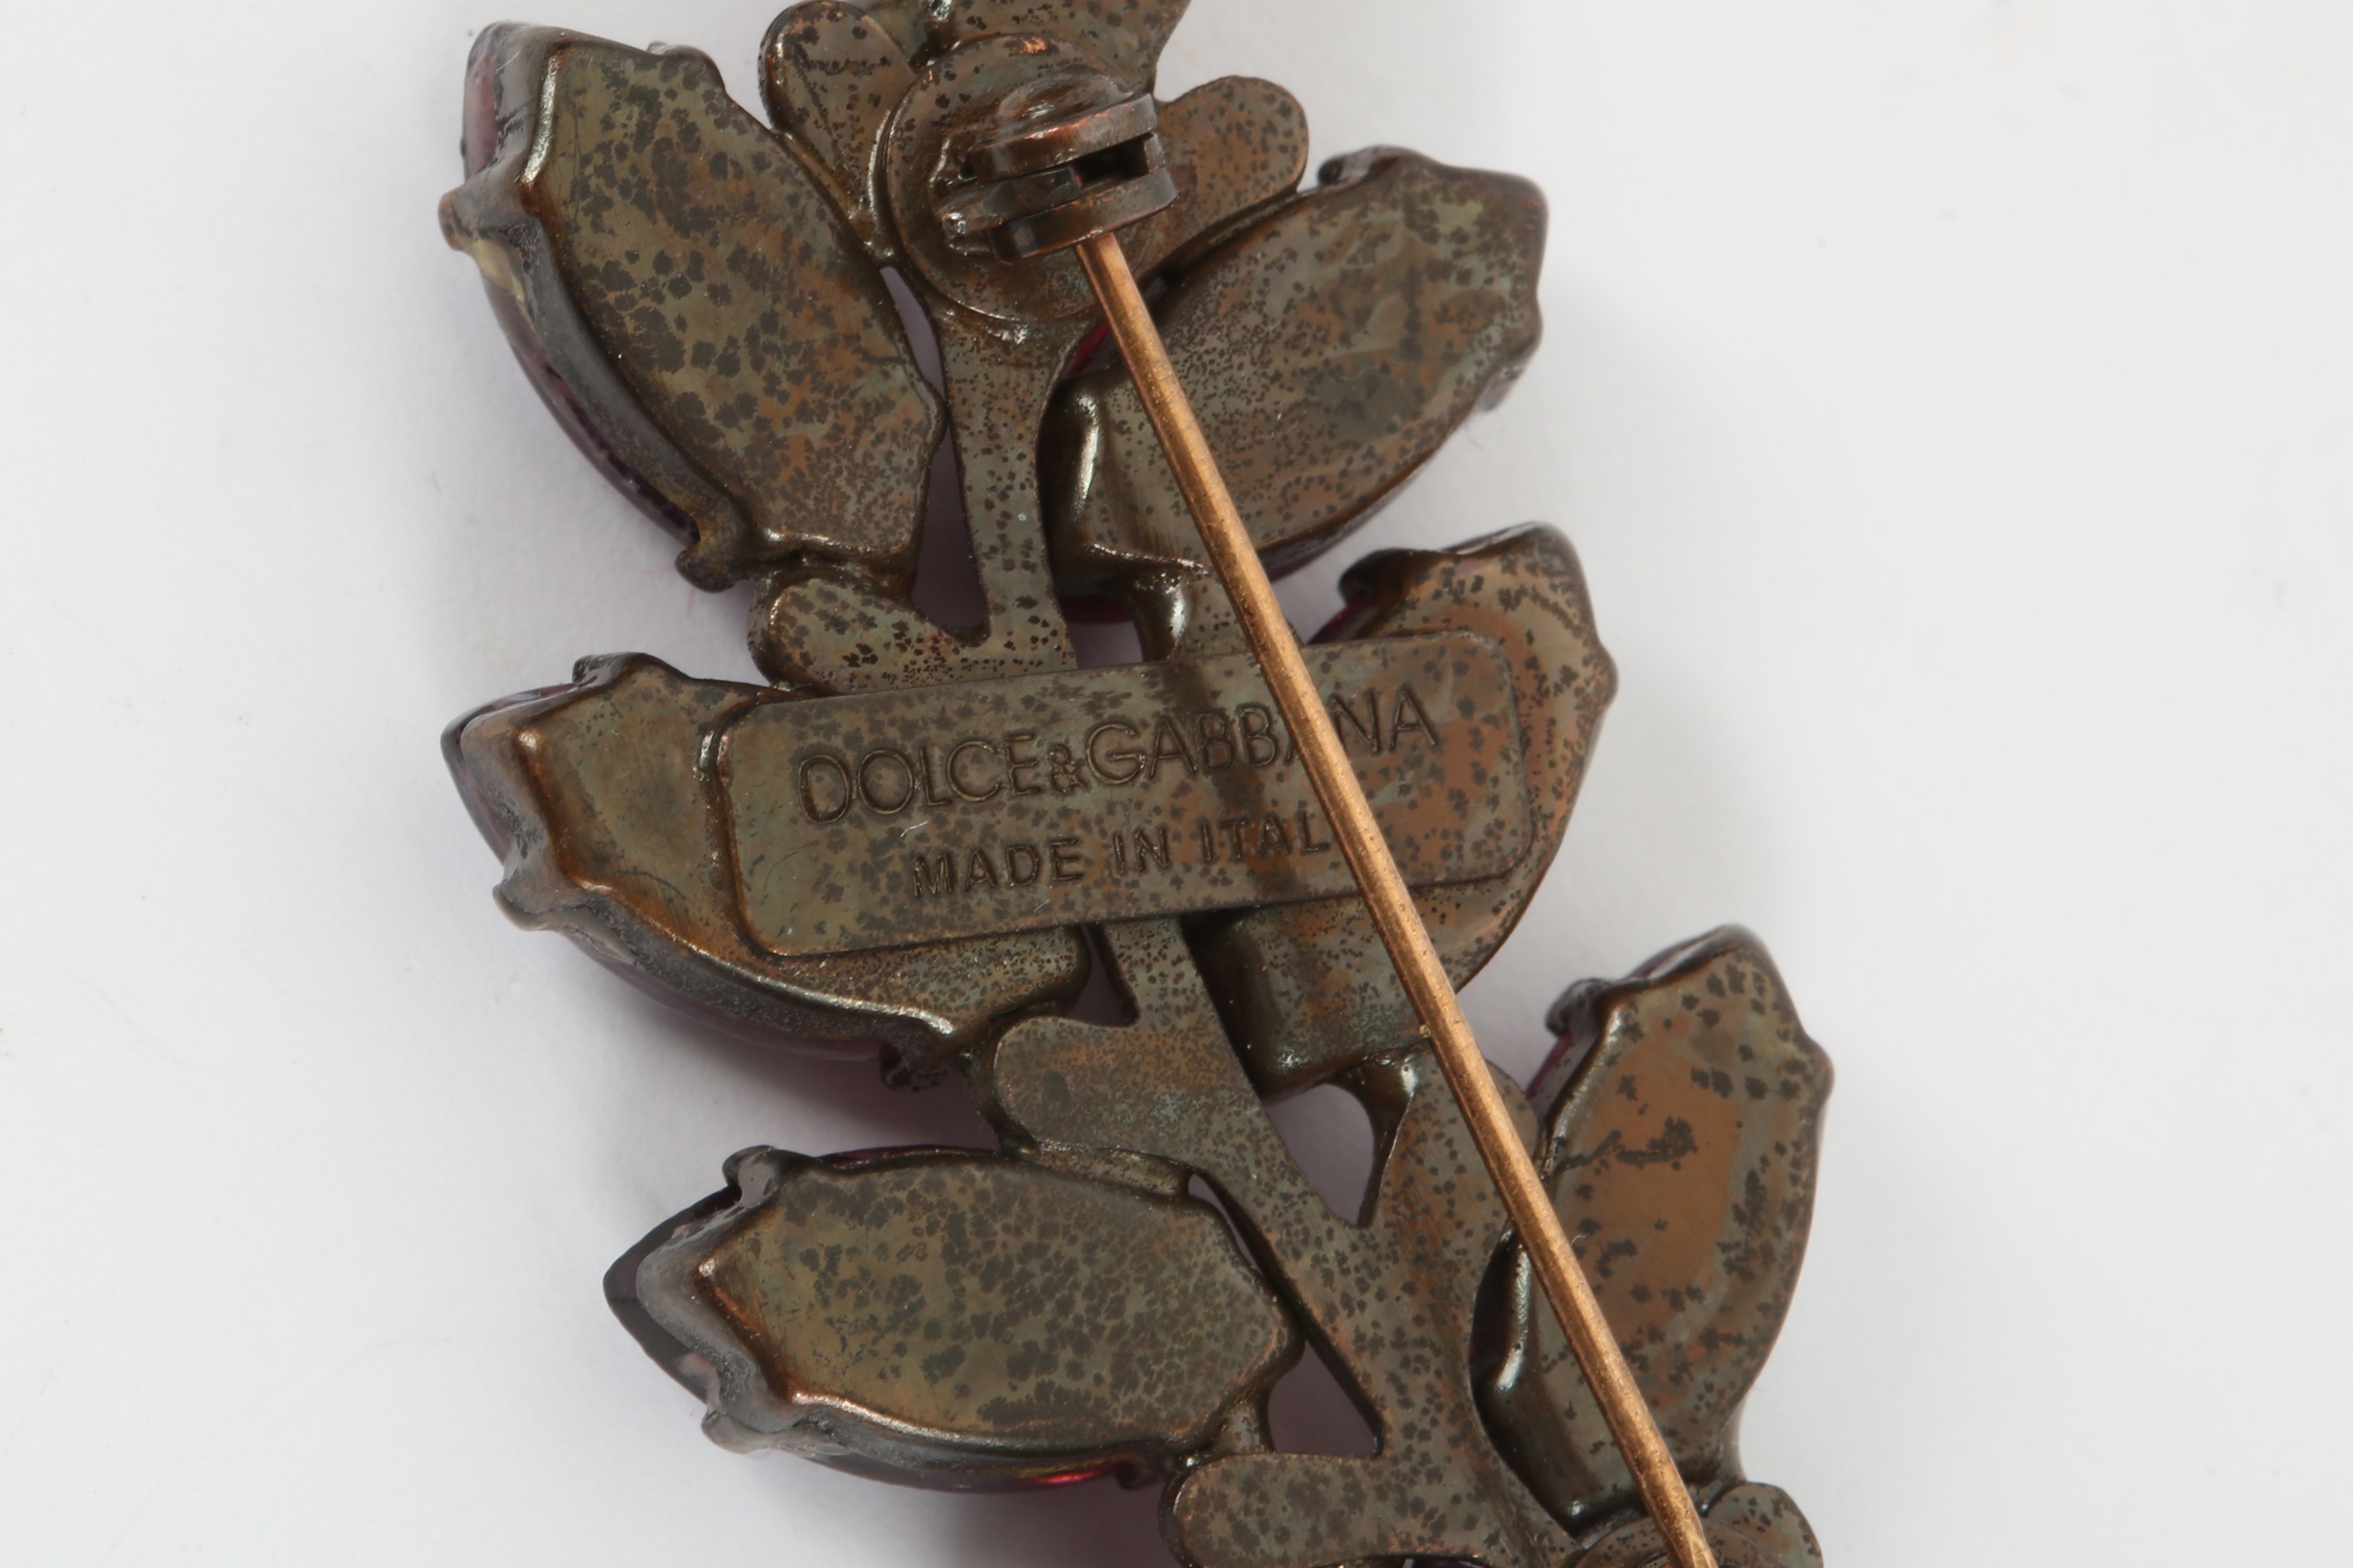 Dolce and Gabbana Amethyst Leaf Brooch - Image 3 of 4